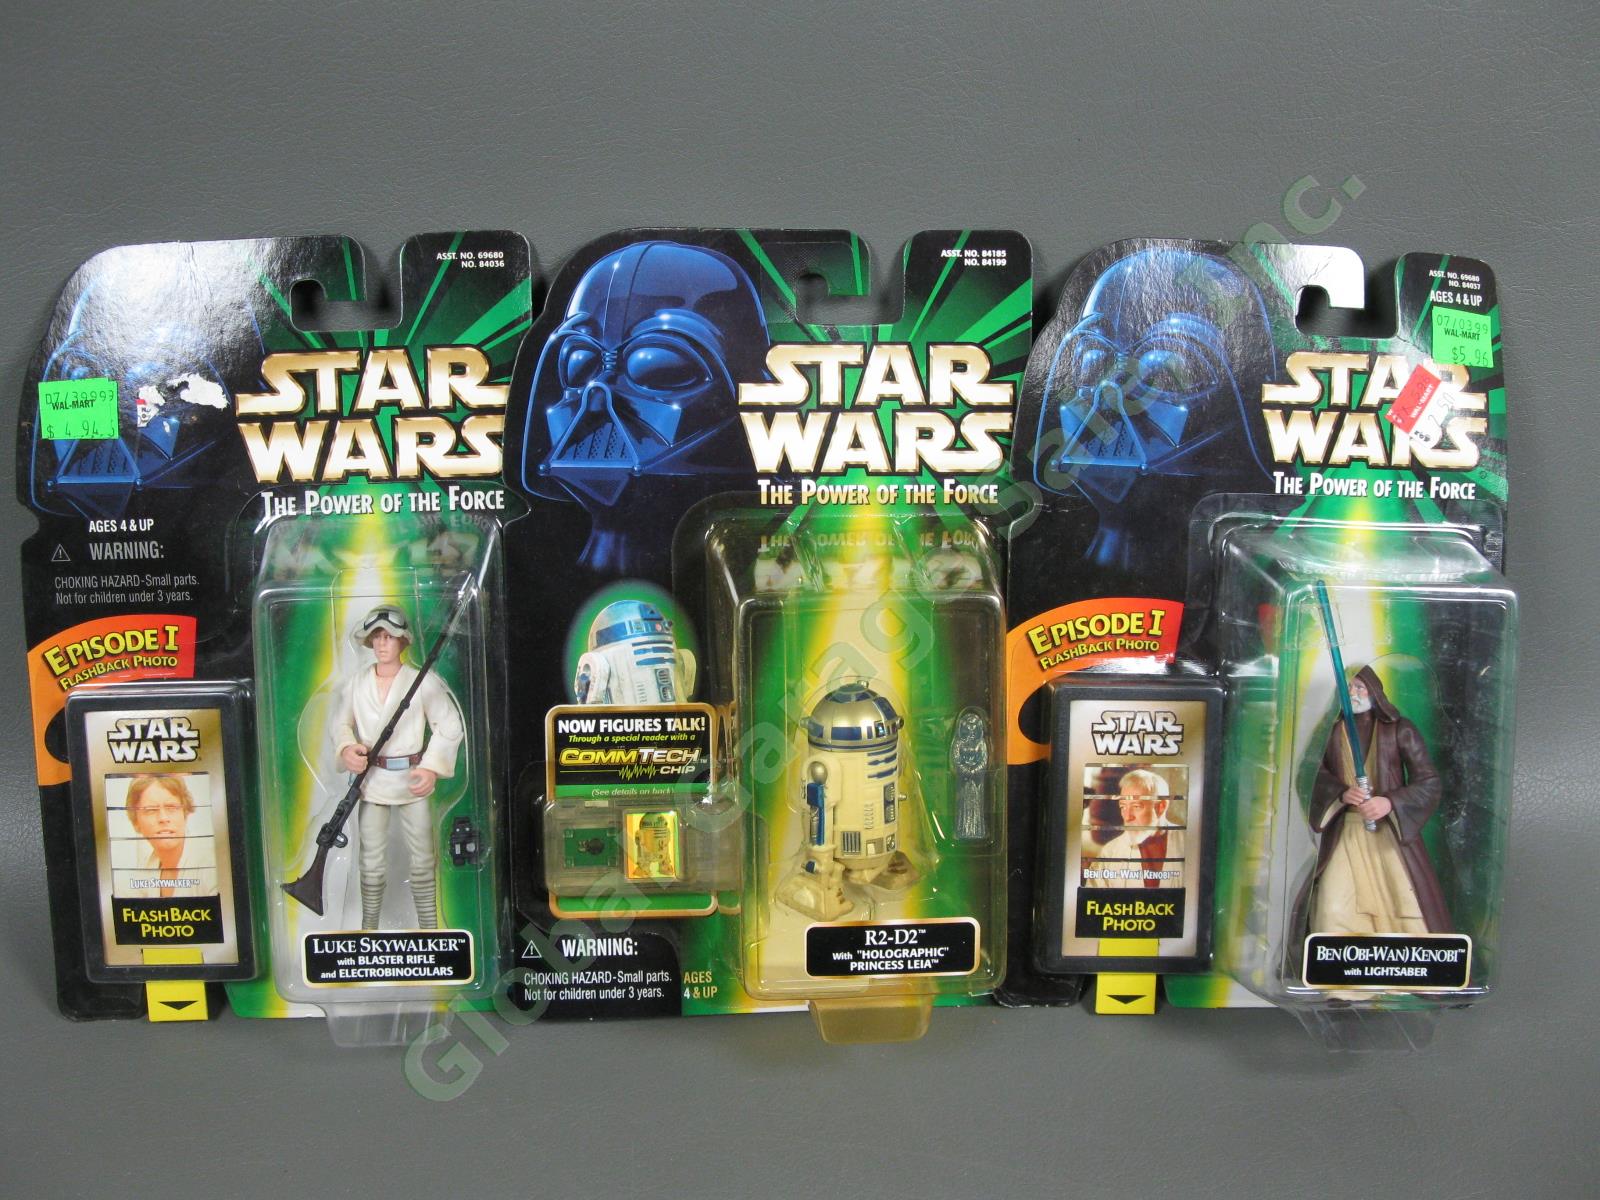 Star Wars IV New Hope POTF Commtech Flashback Photo Figure Lot Vader Luke Leia 3